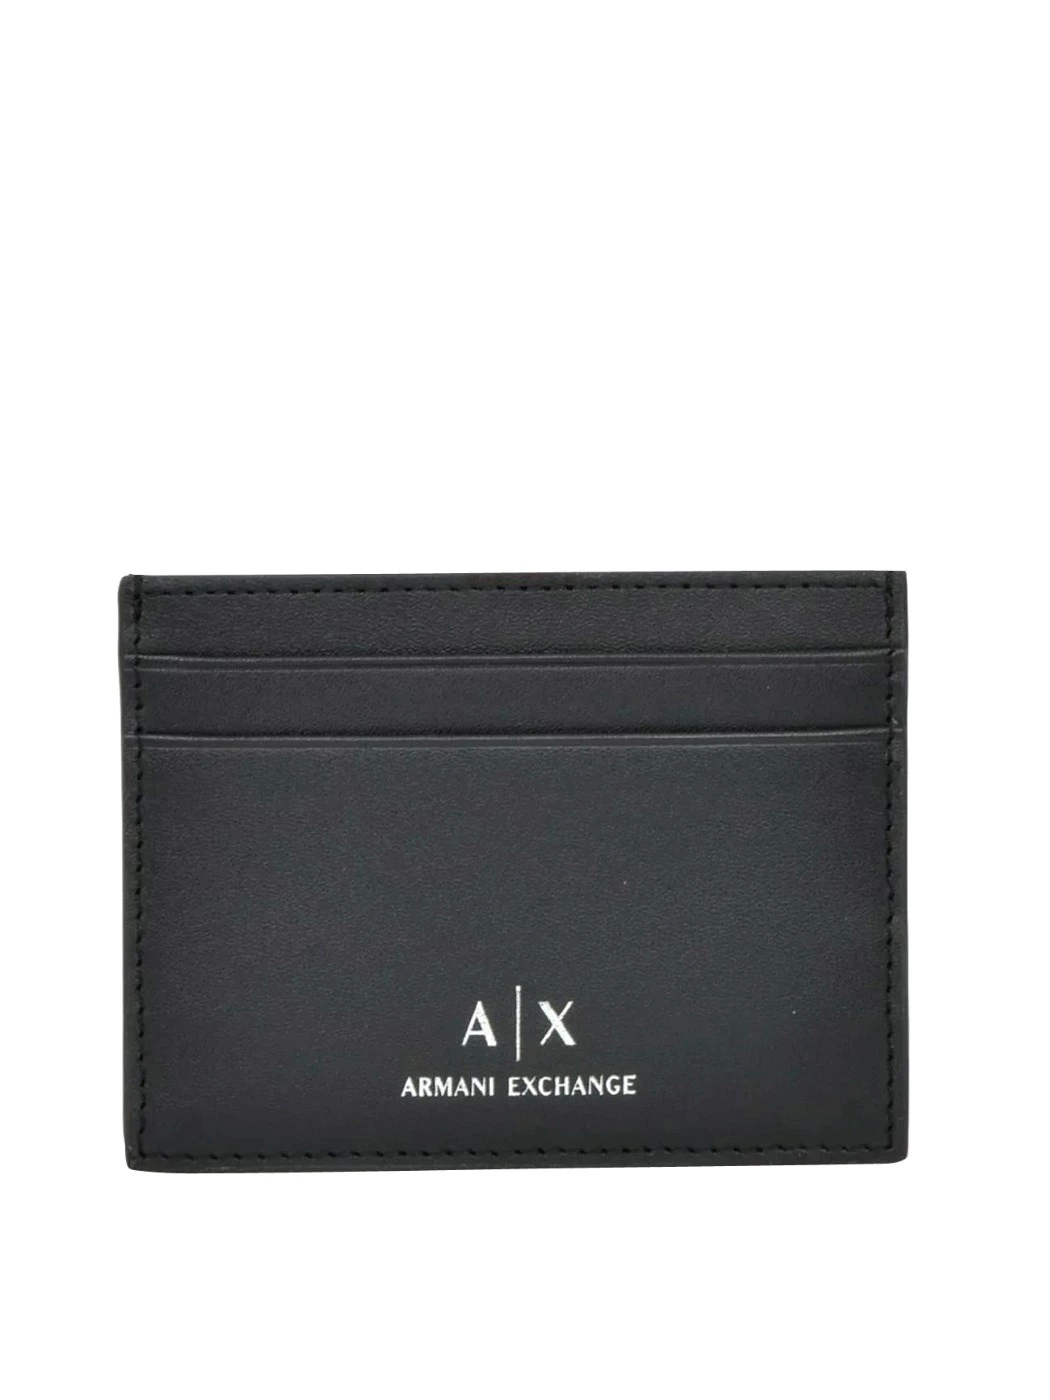 Armani Exchange card holder